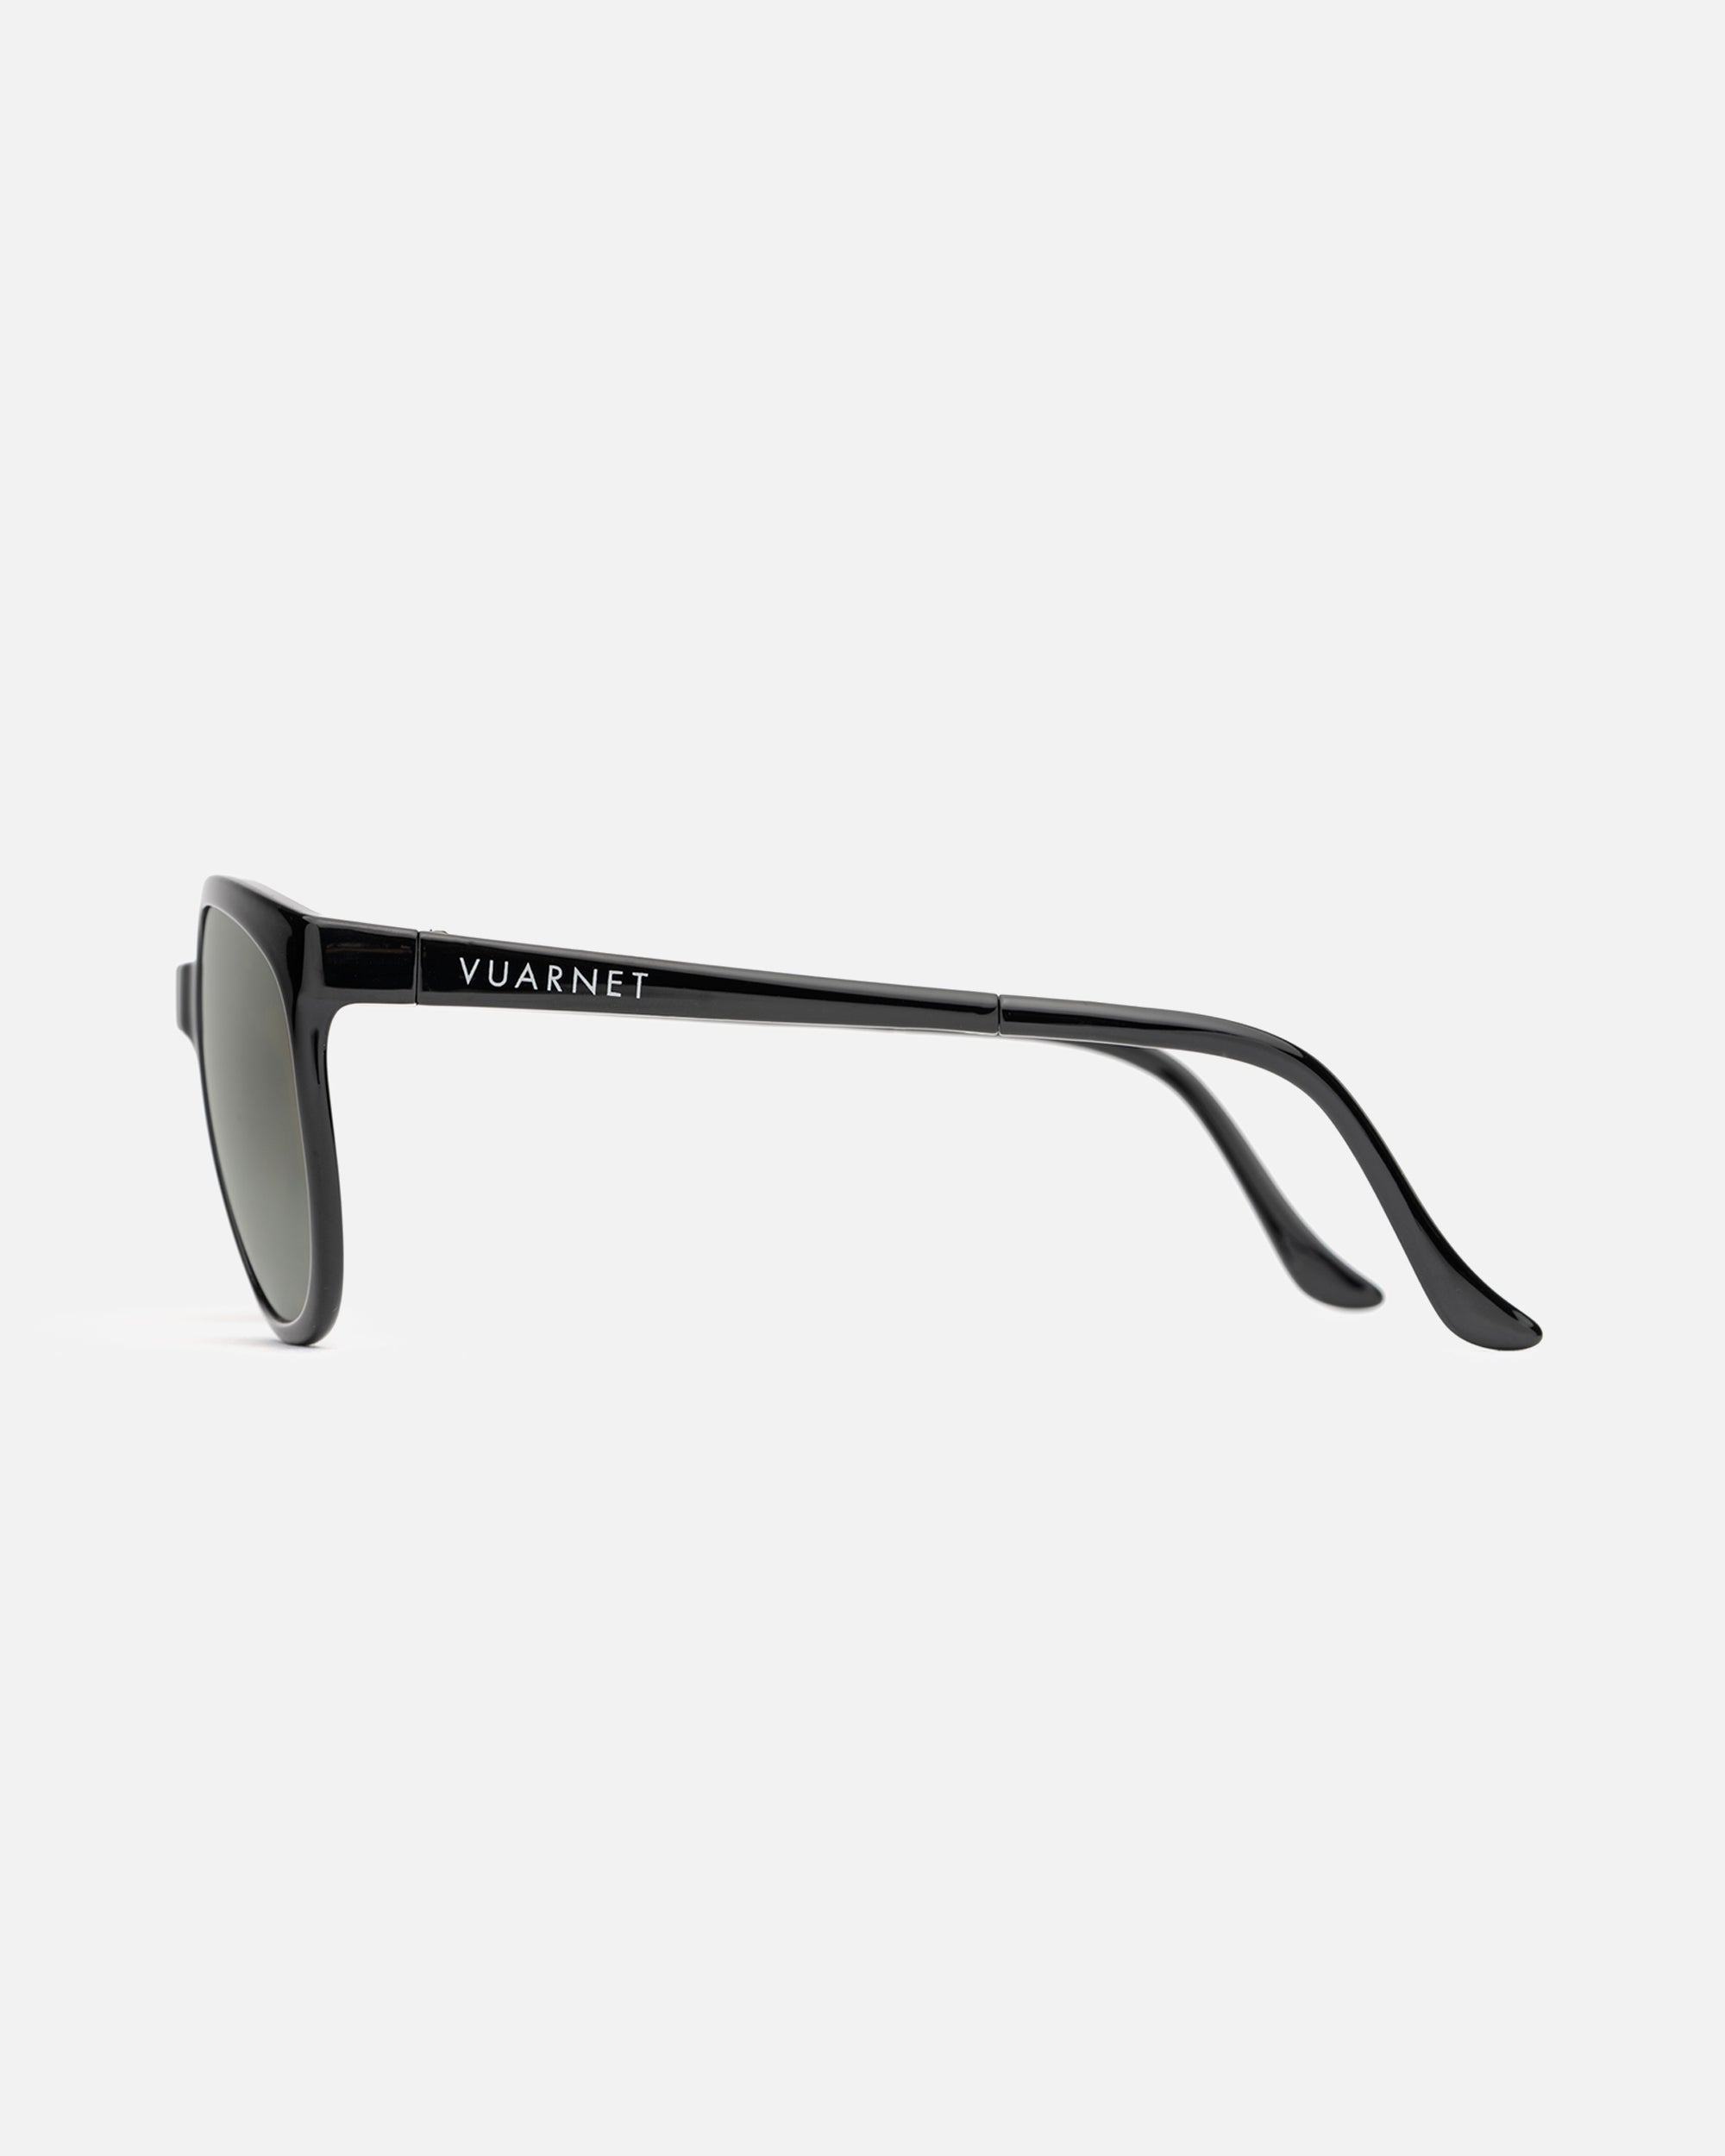 Vuarnet Black FOLDABLE LEGEND 02 Lifestyle Sunglasses